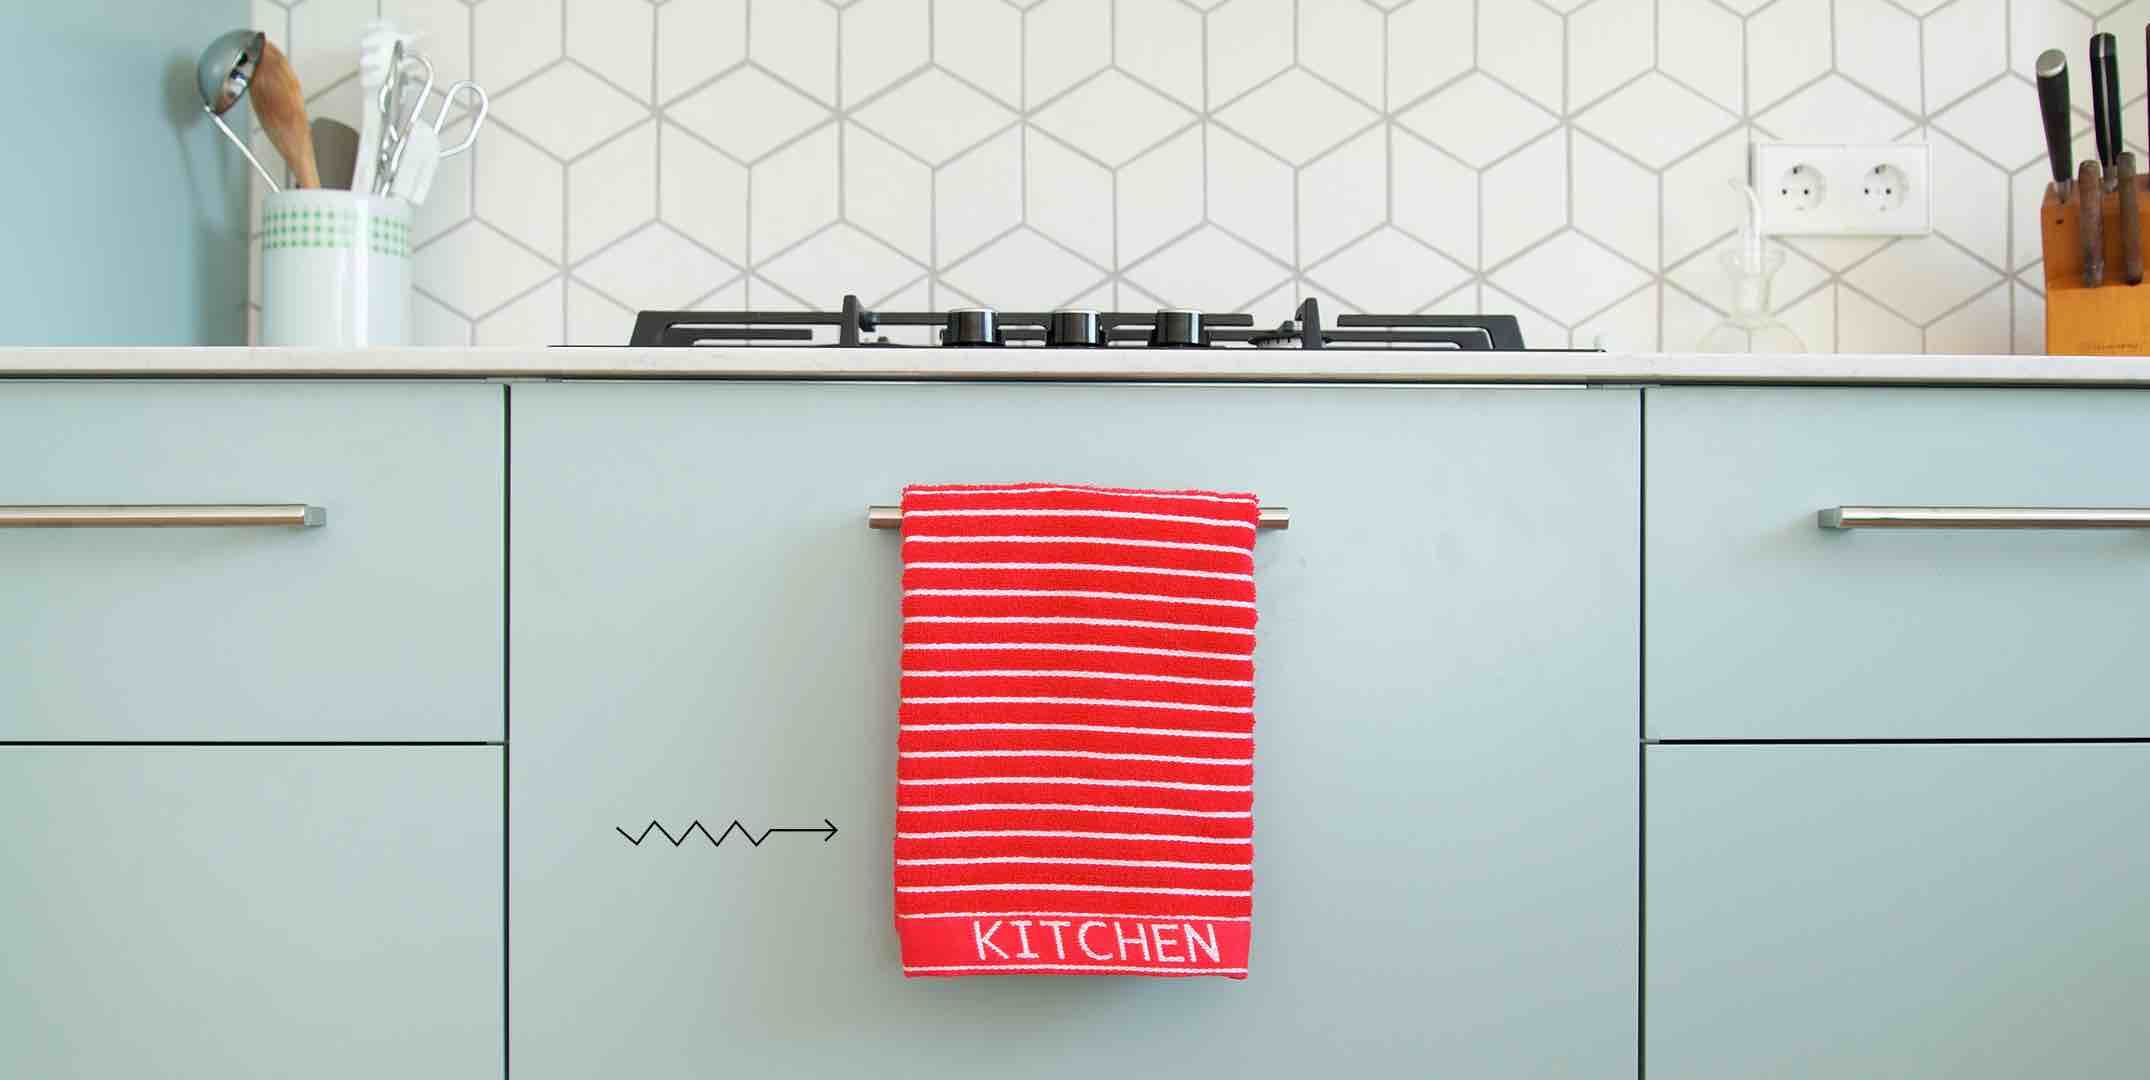 Best Kitchen Towels  Hanging Kitchen Towels